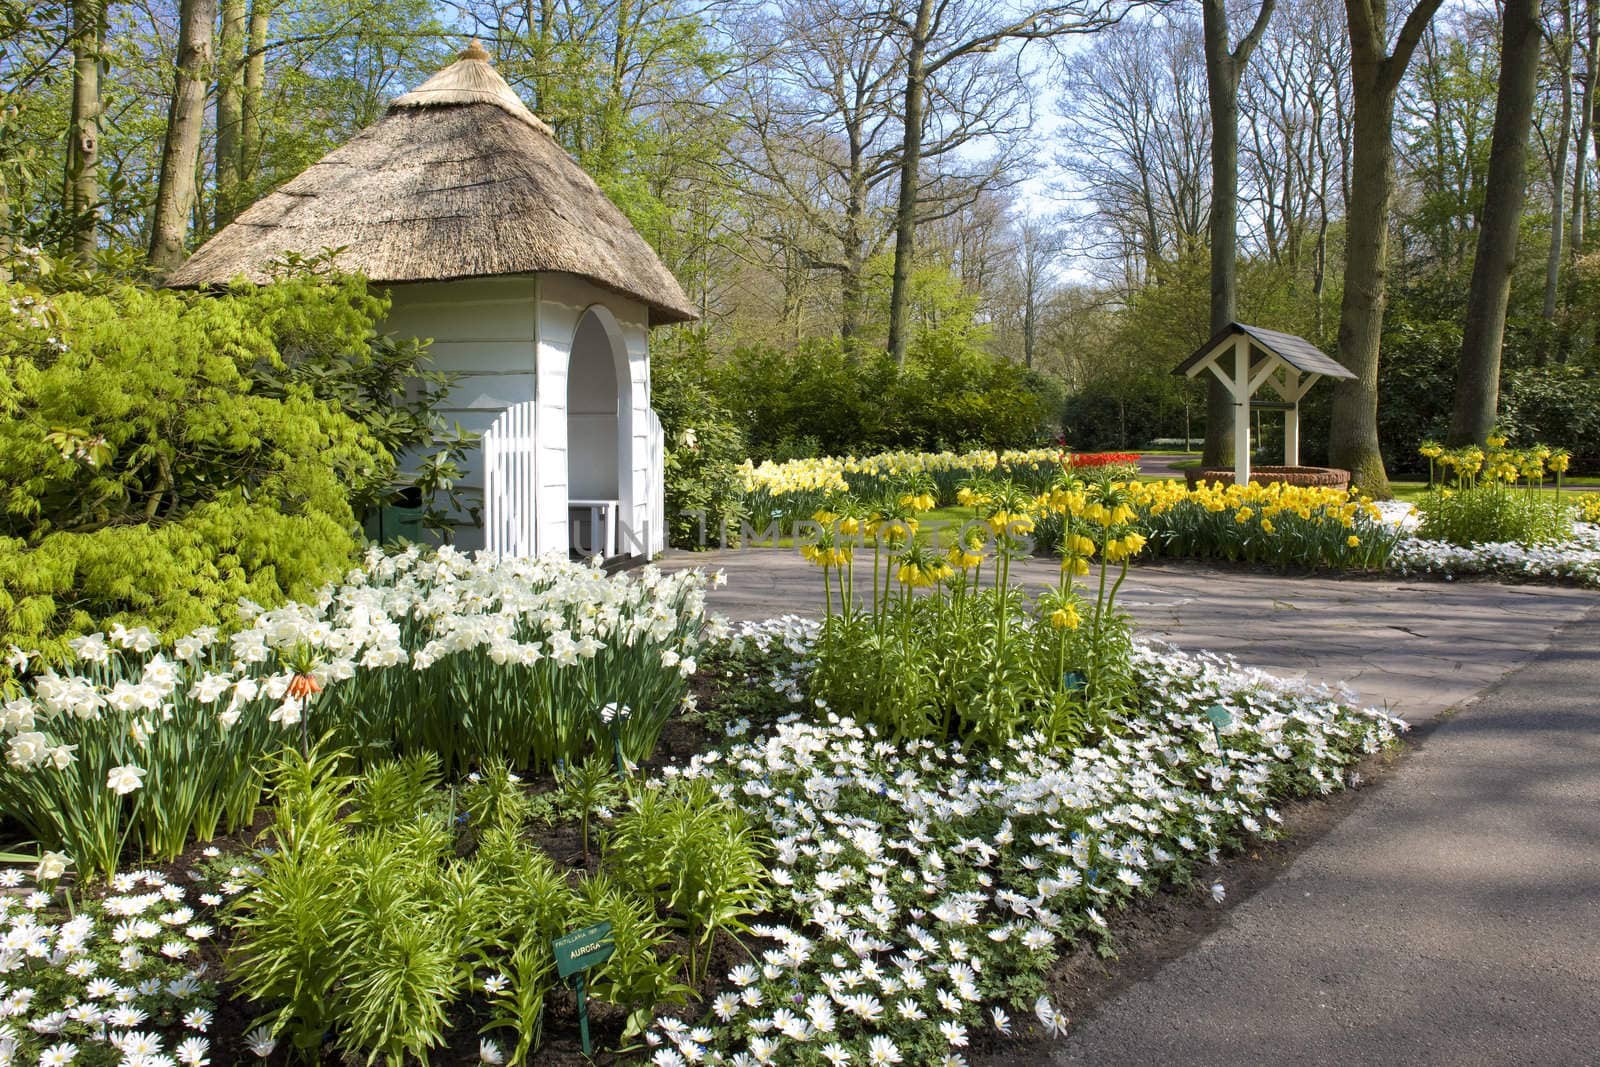 Keukenhof Gardens, Lisse, Netherlands by phbcz